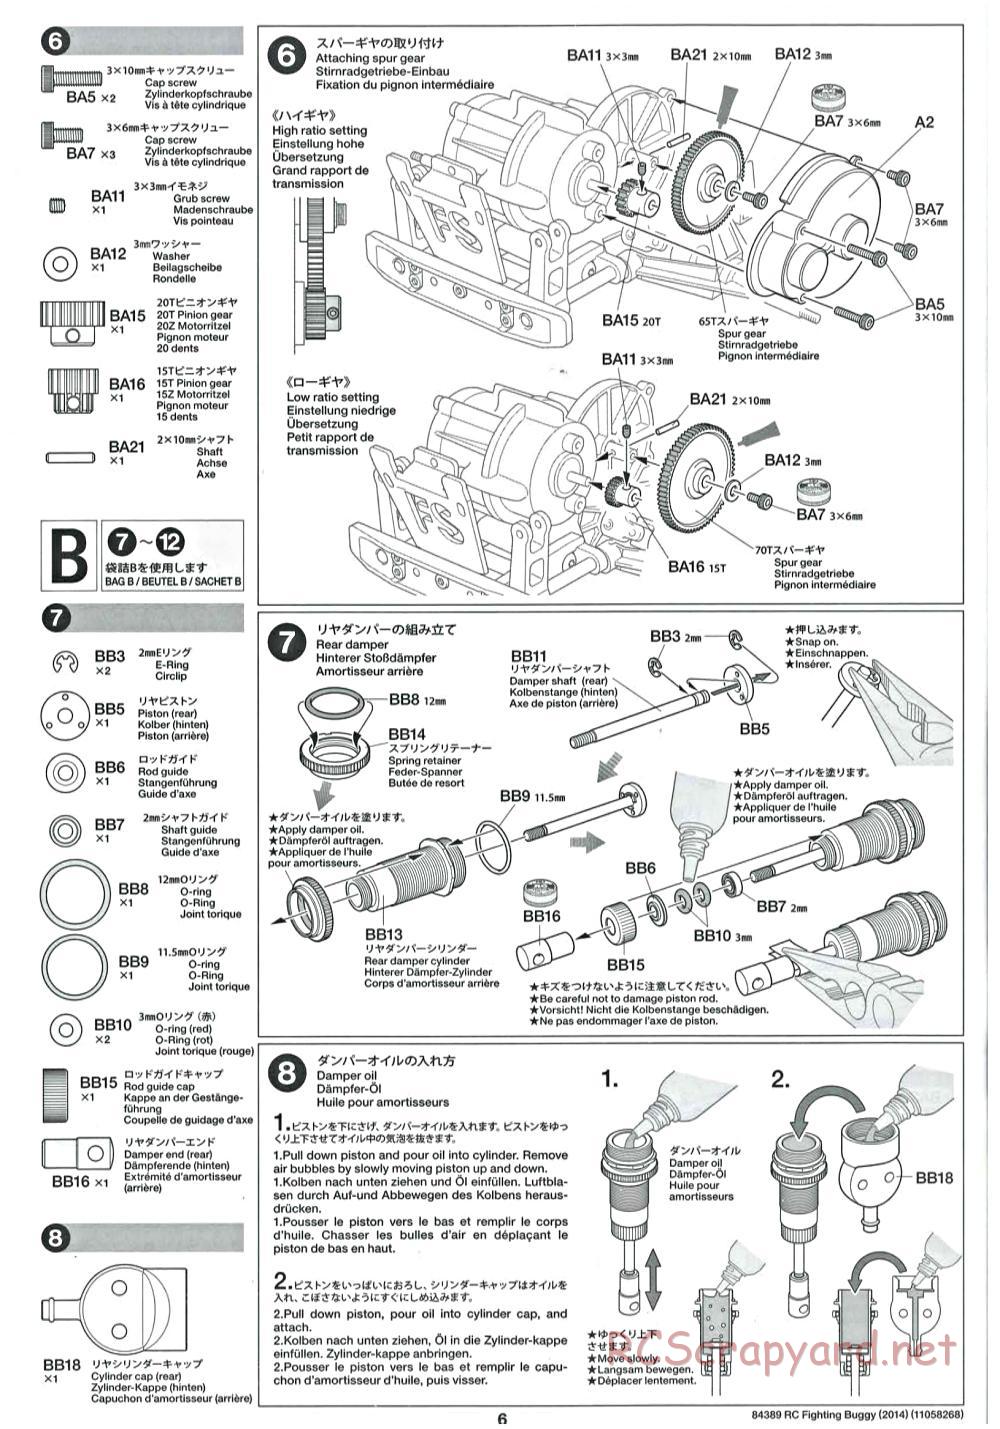 Tamiya - Fighting Buggy (2014) Chassis - Manual - Page 6